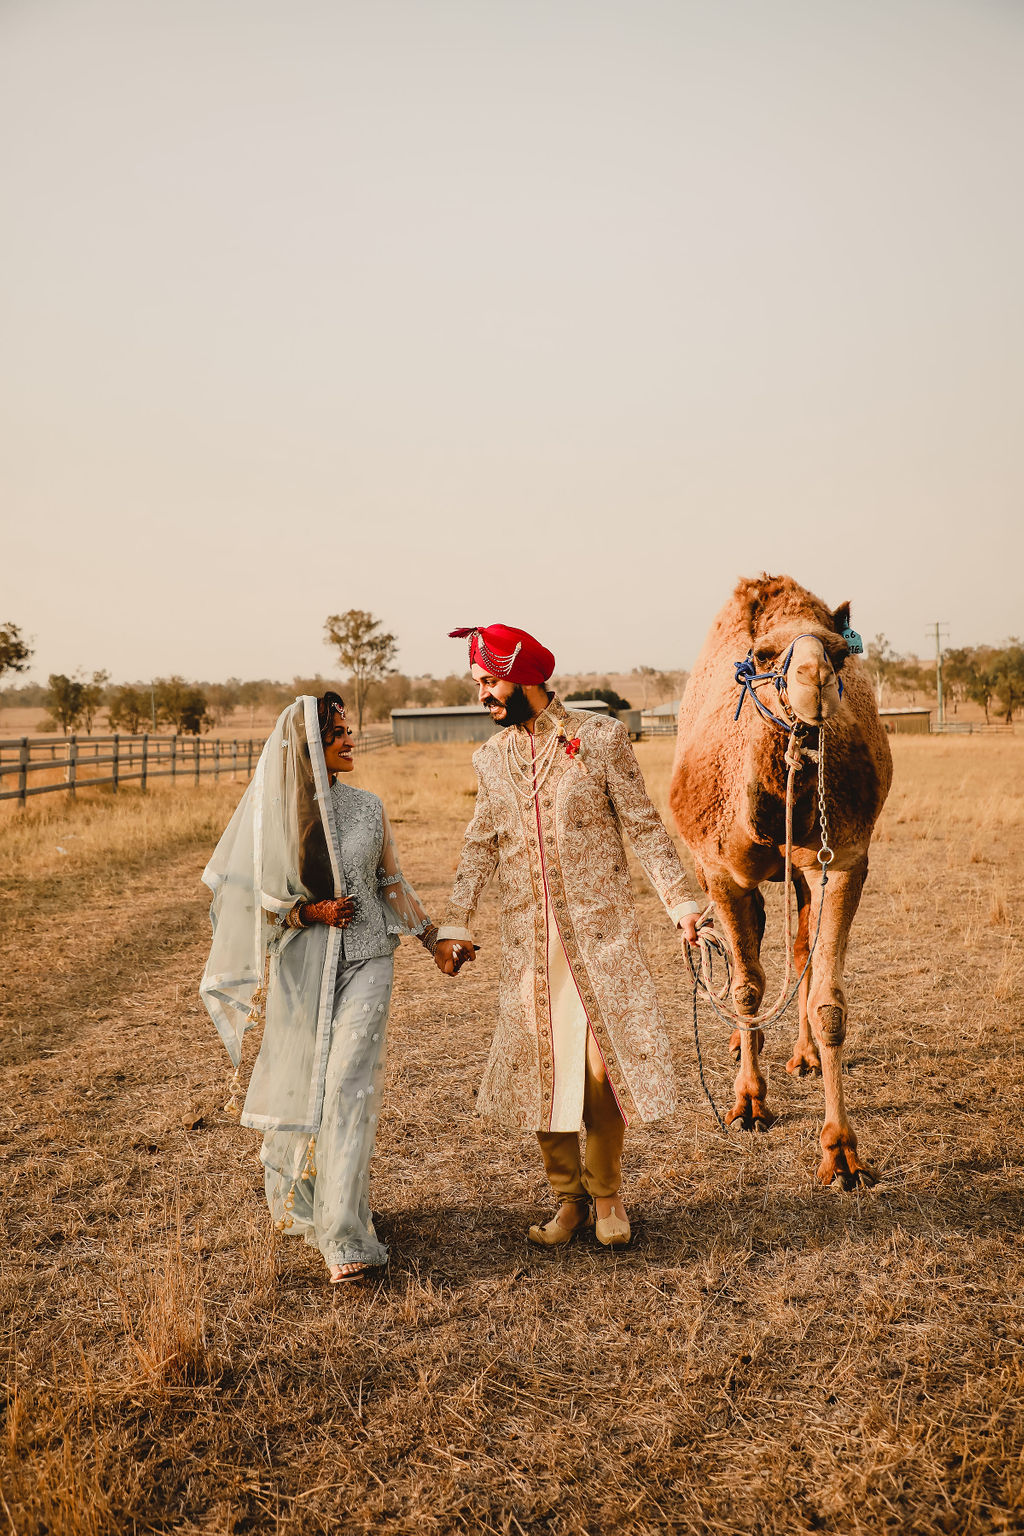 Brisbane Wedding Planner - Indian bride and groom leading a camel